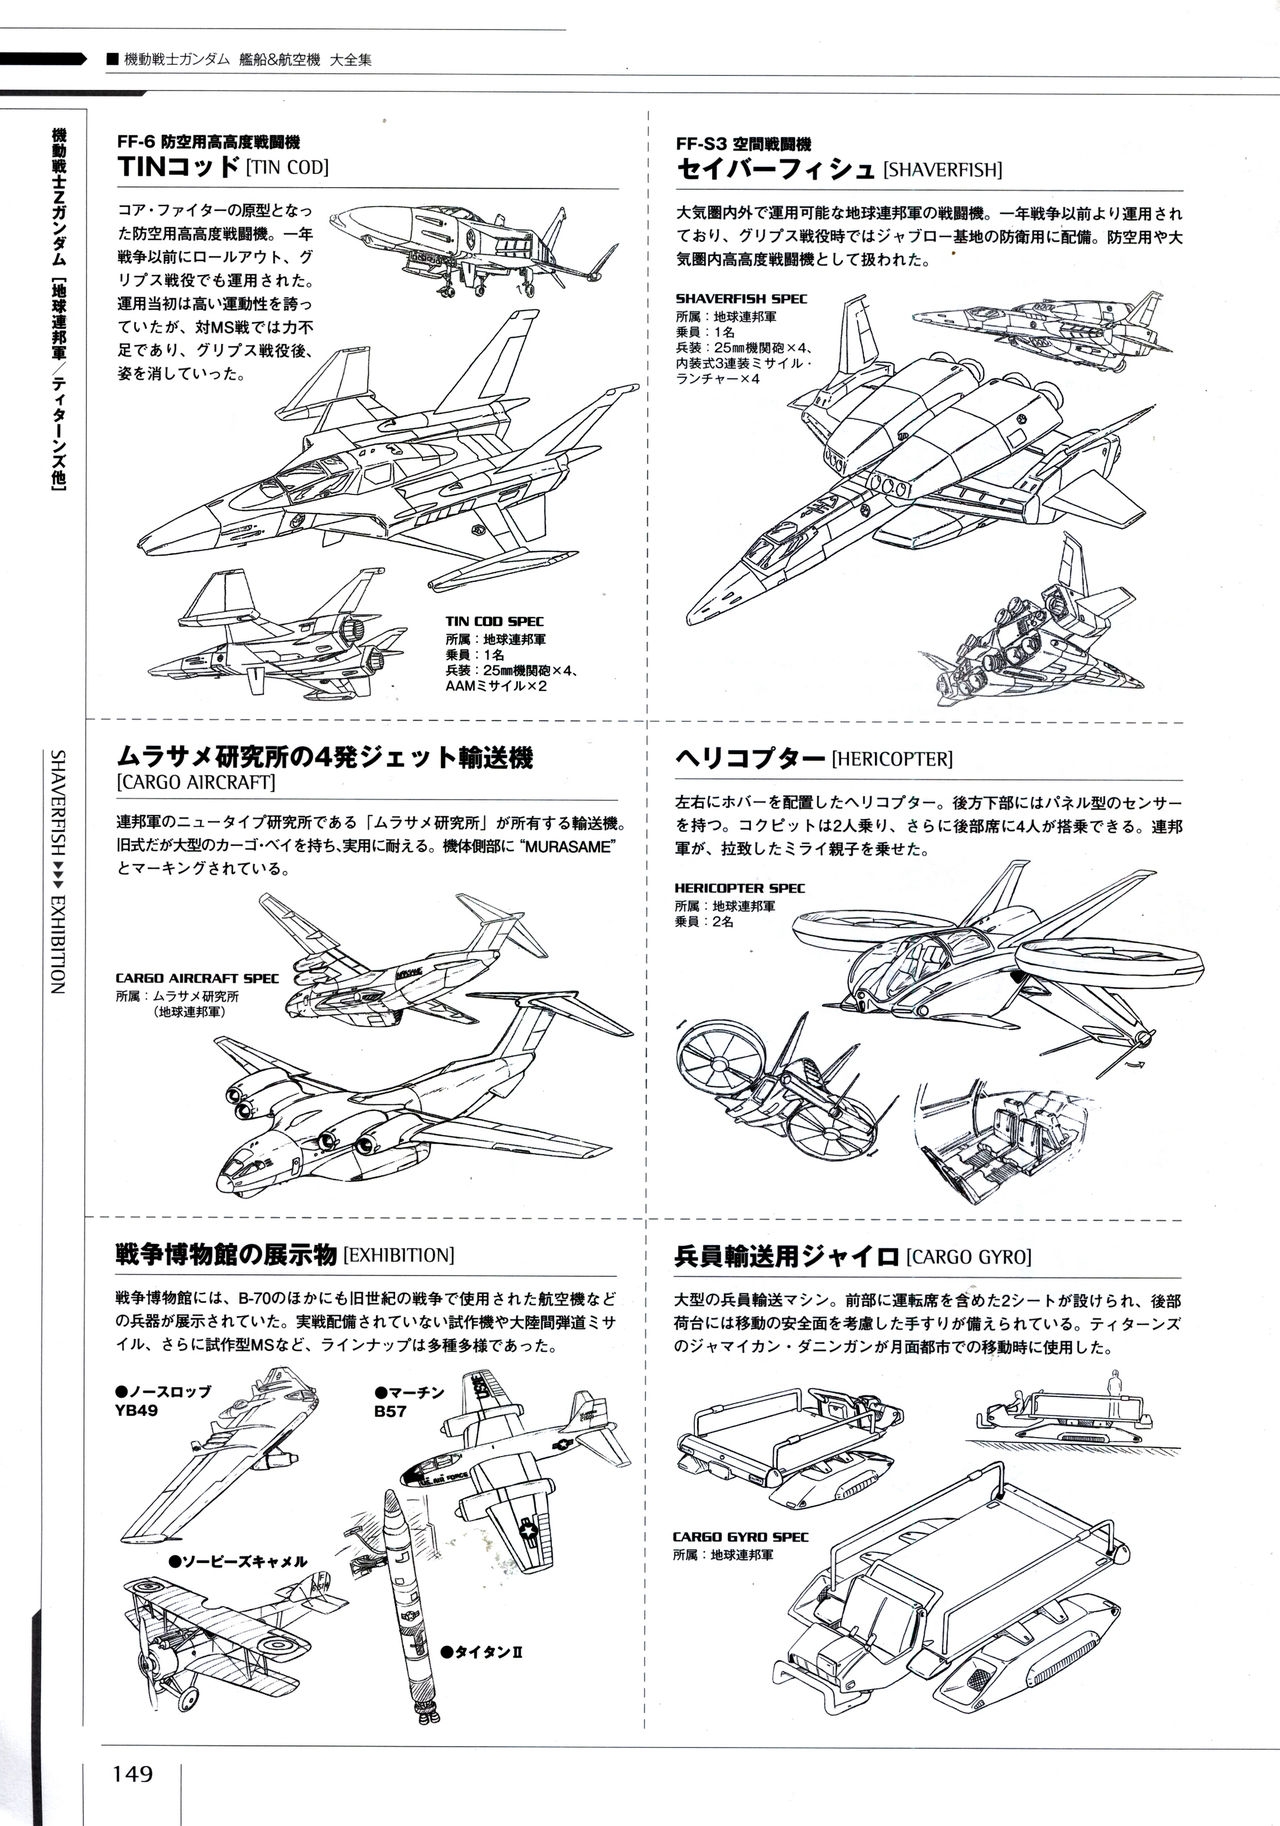 Mobile Suit Gundam - Ship & Aerospace Plane Encyclopedia - Revised Edition 154